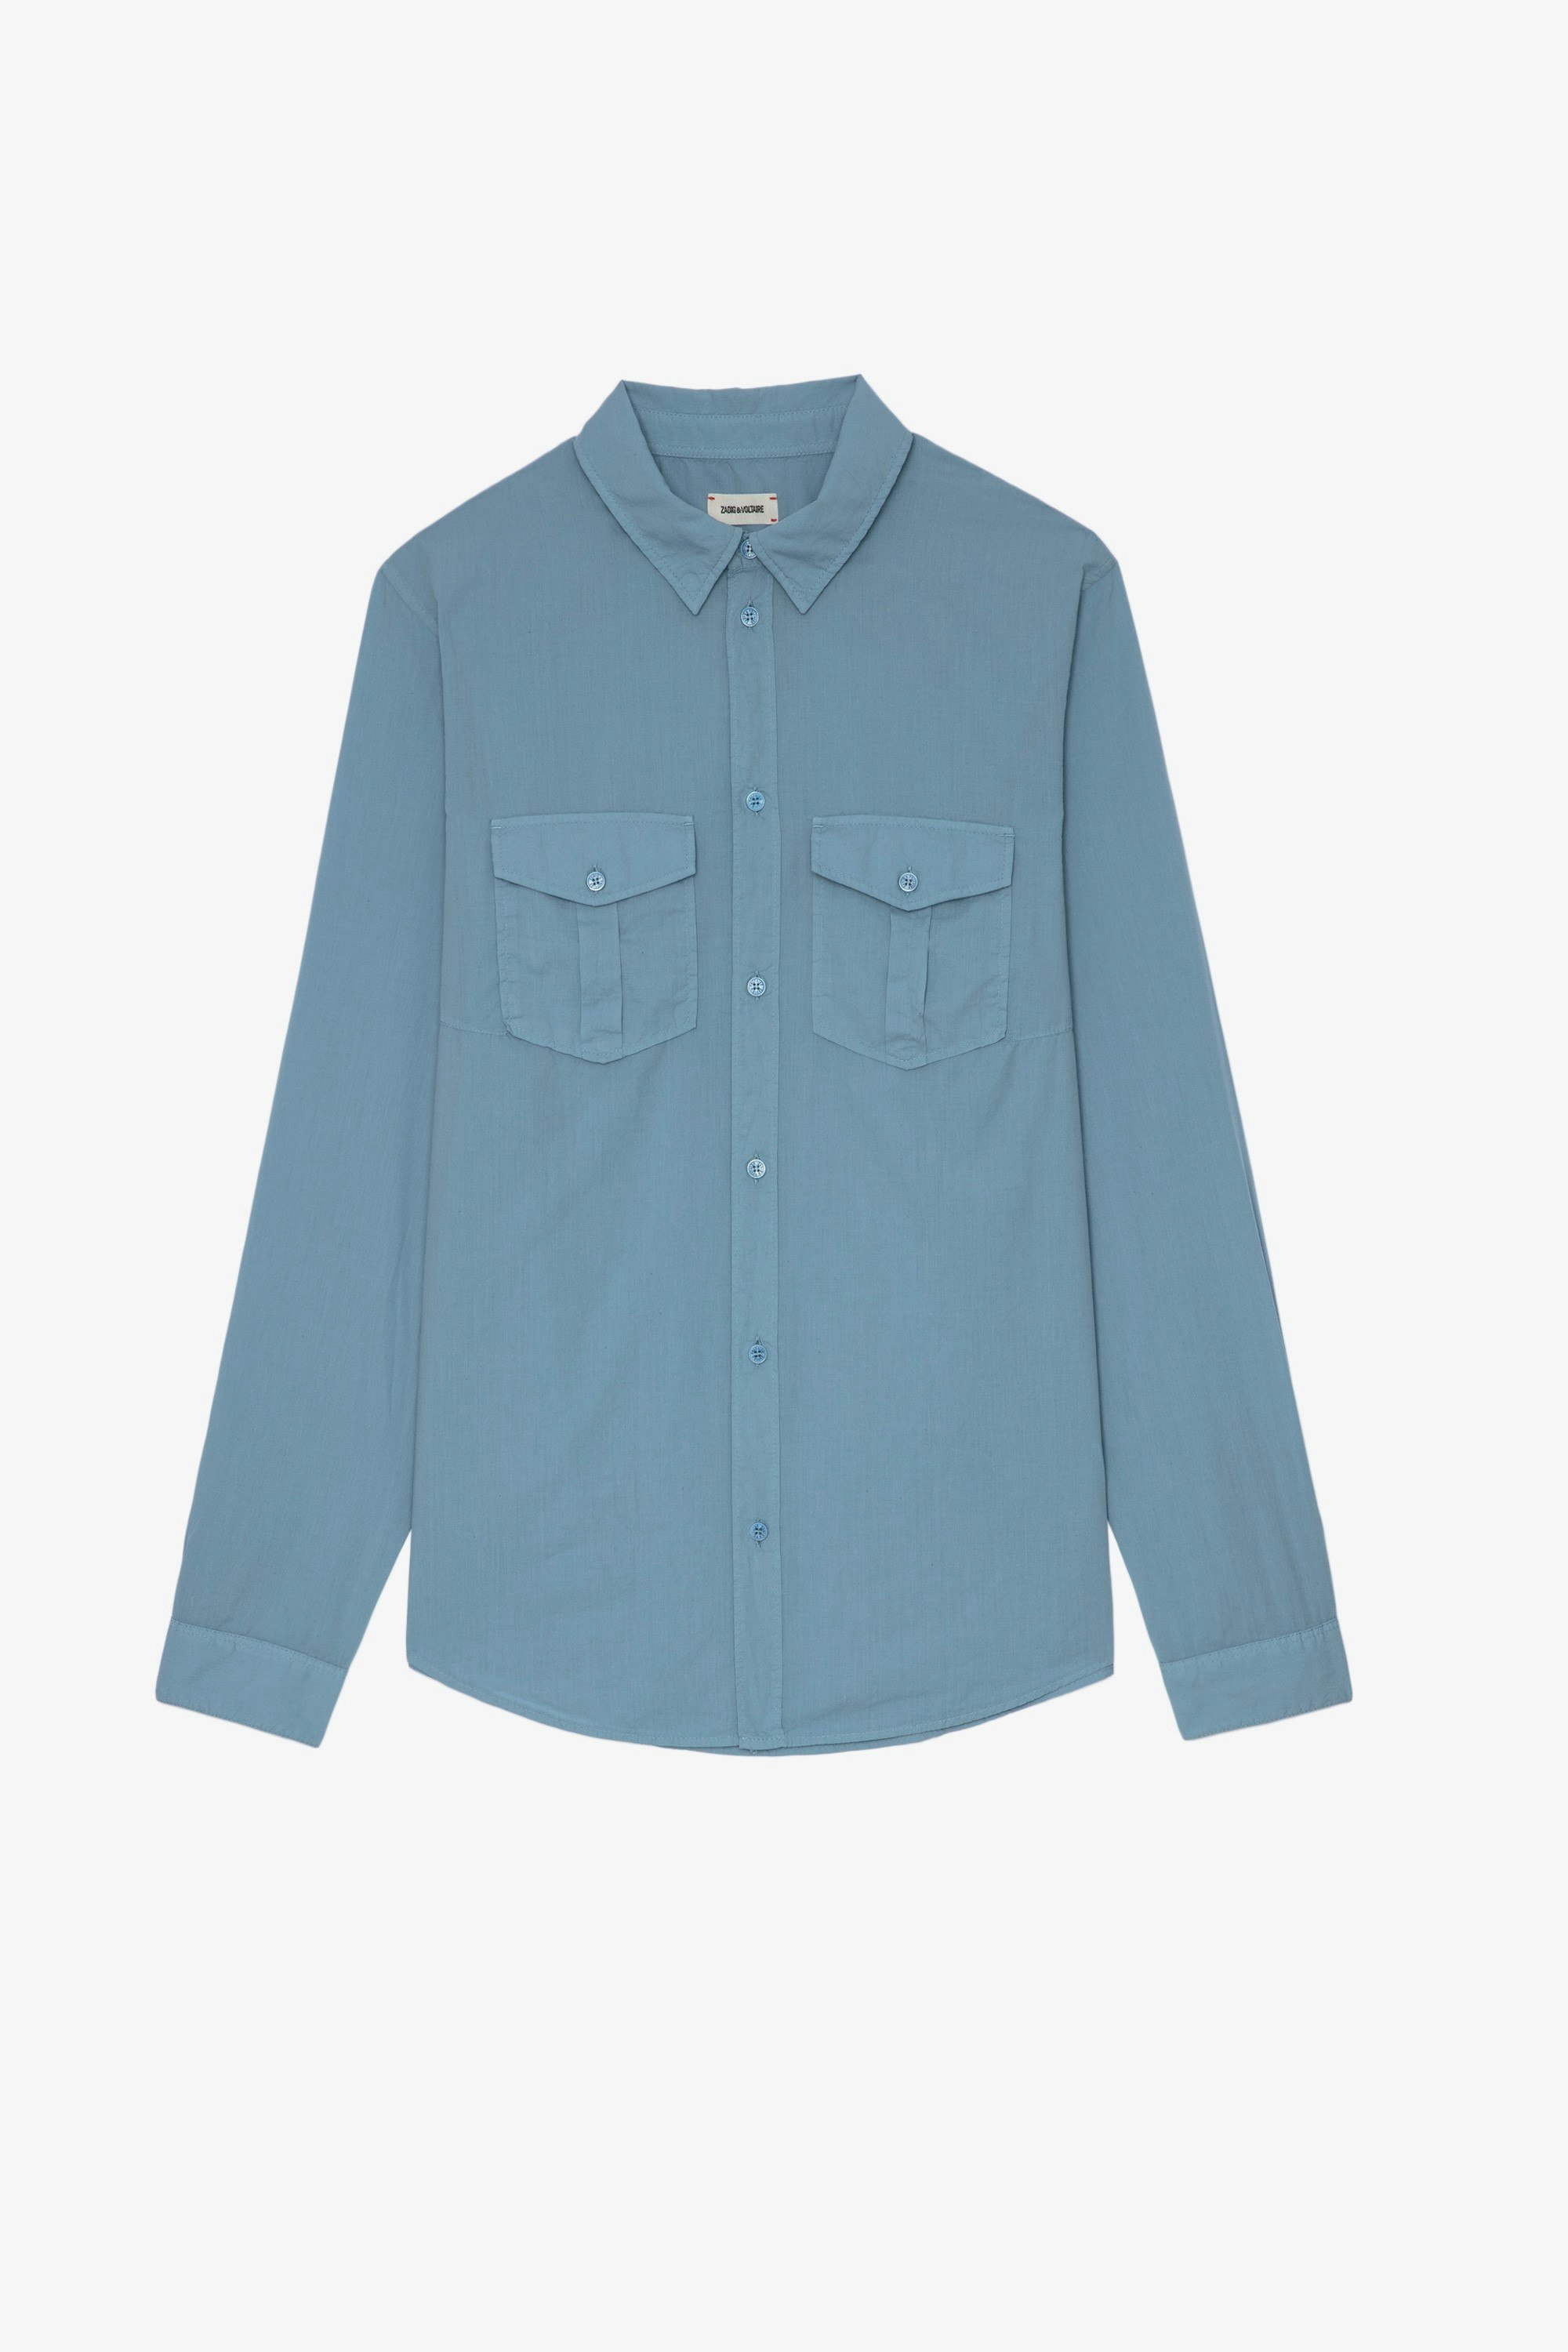 Thibaut Shirt Men’s sky-blue cotton shirt